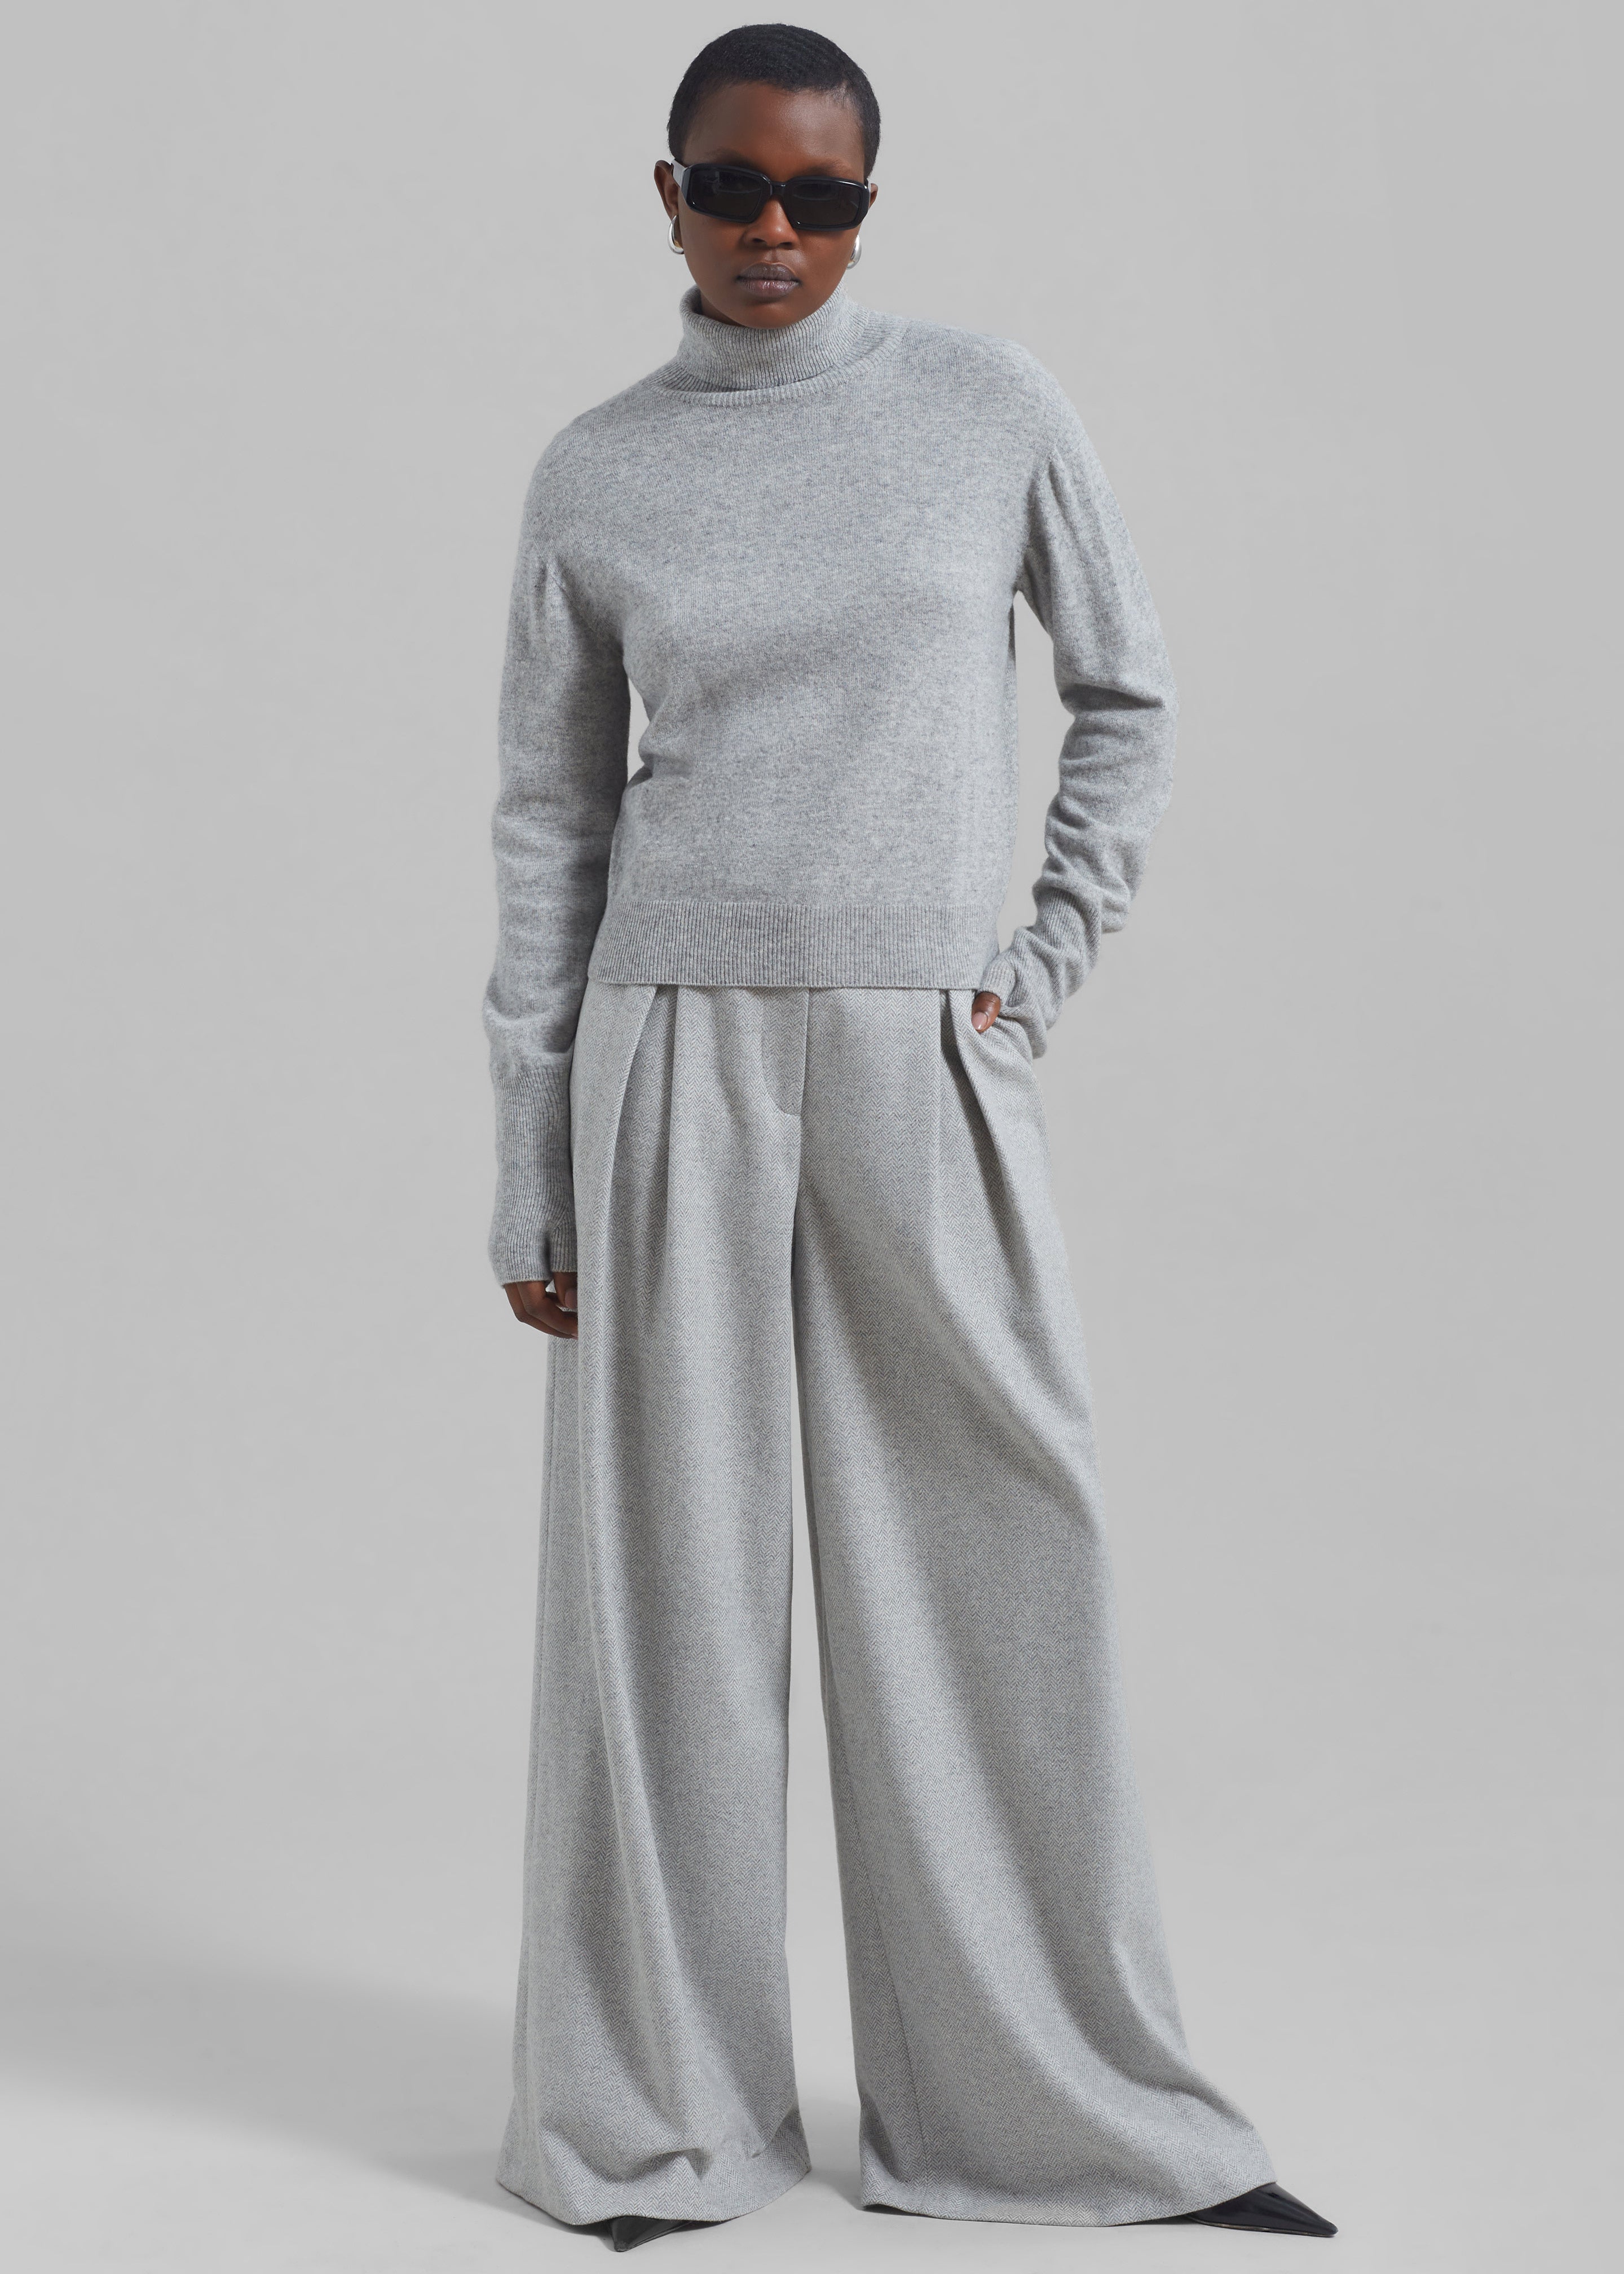 The Garment Trento Pants - Heather Grey Herringbone - 3